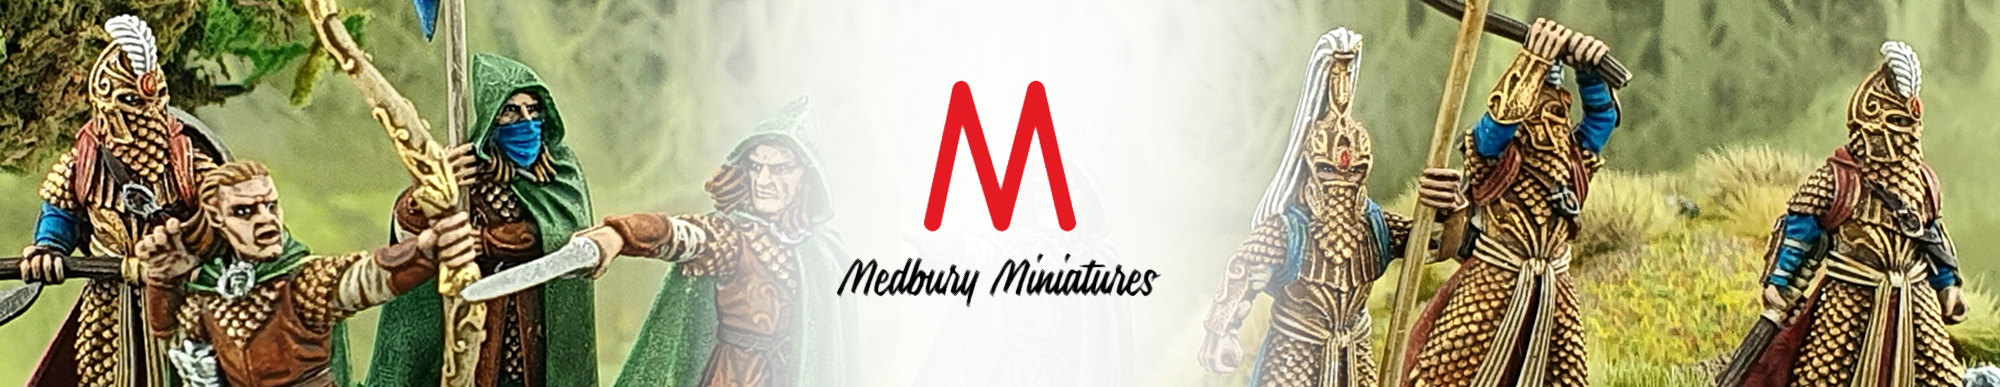 Medbury Miniatures wargaming miniatures banner